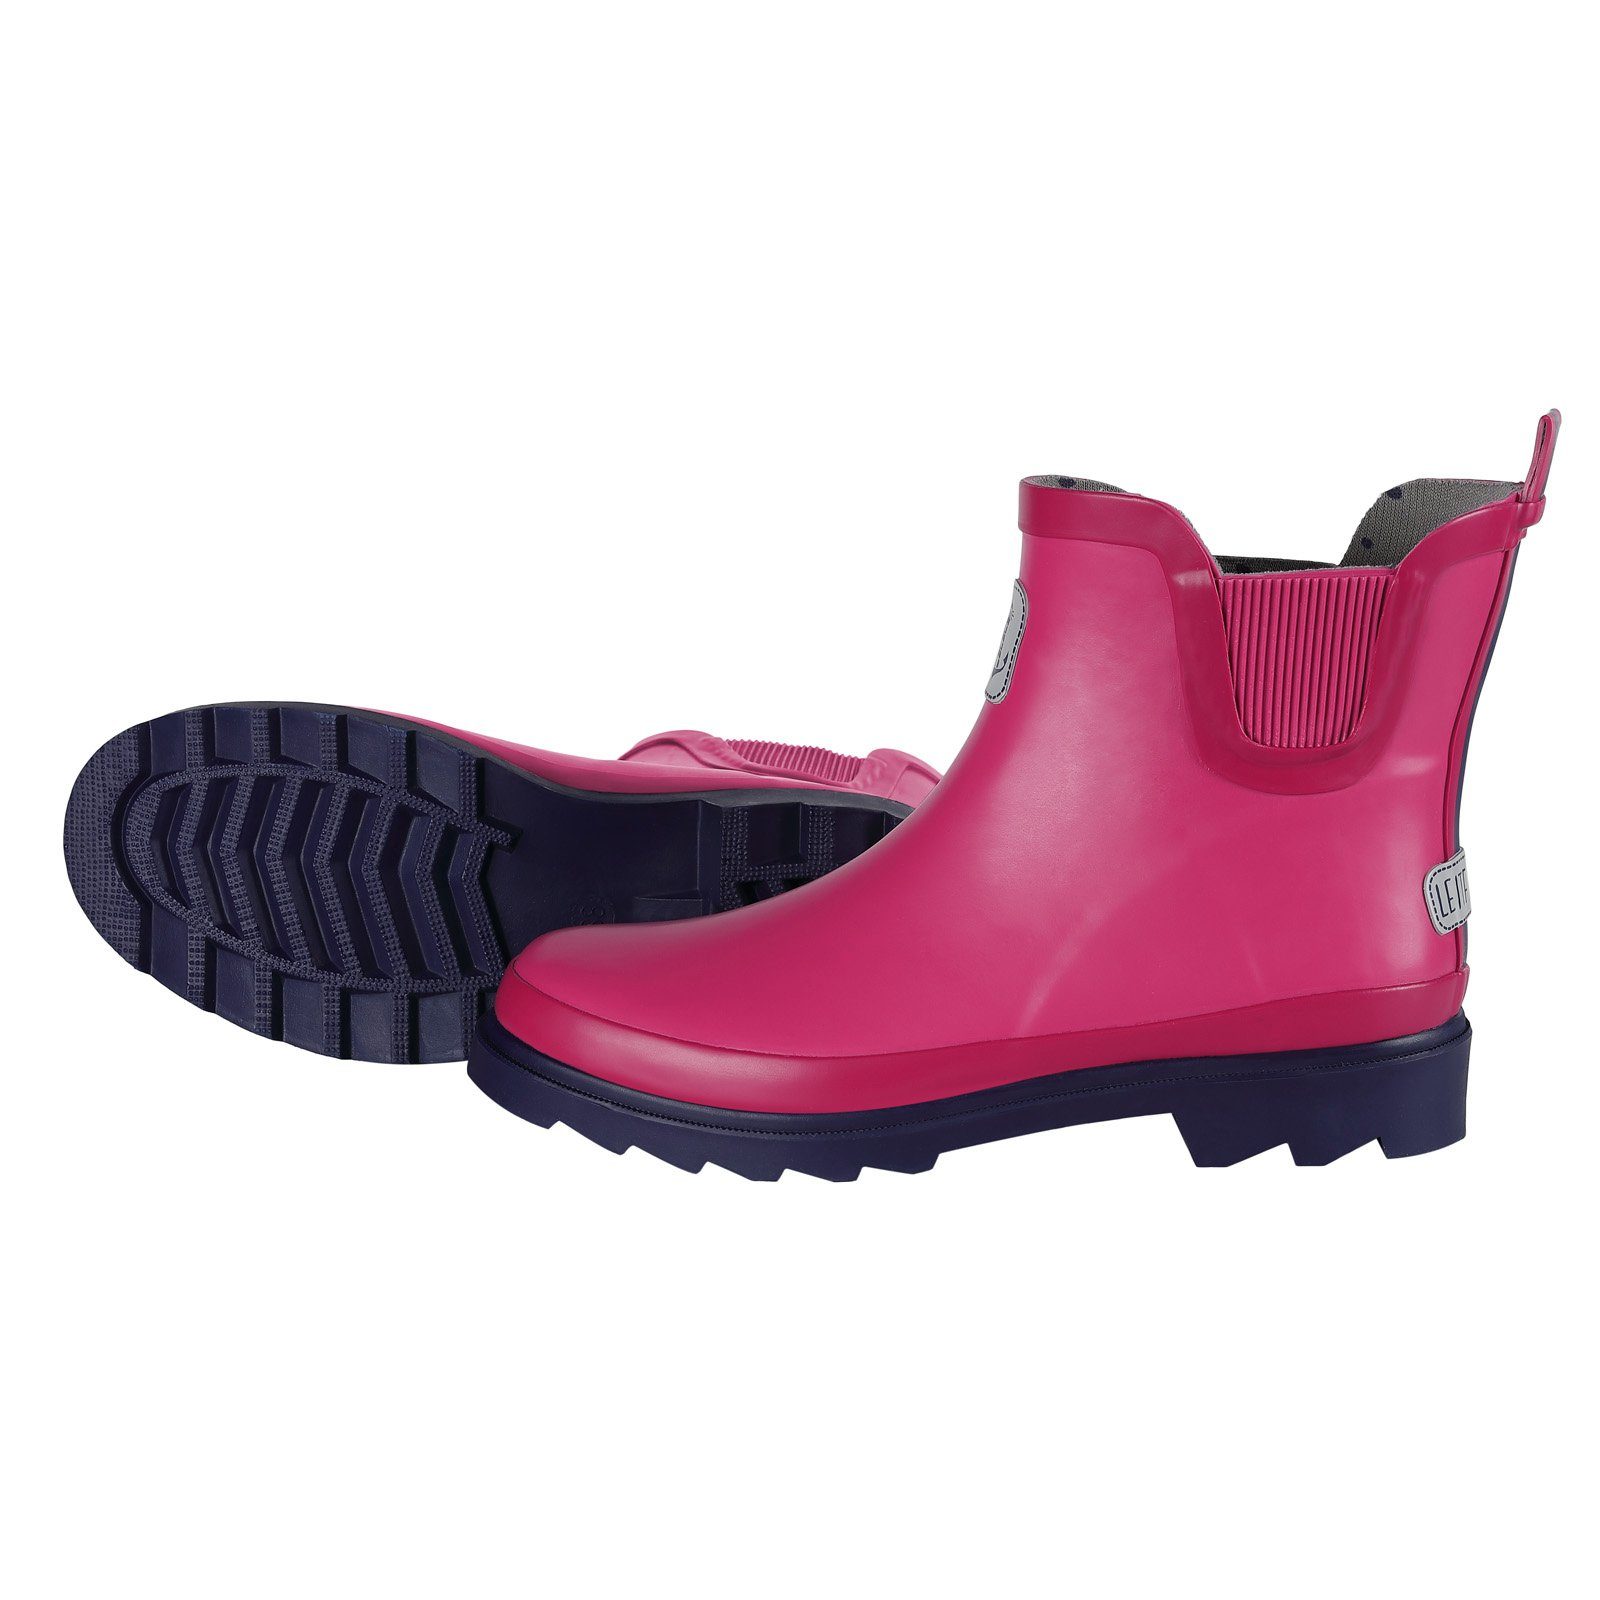 Leitfeuer Gummistiefelette Damen Gummistiefel halbhoch unifarben - Regenstiefel Chelsea Boot pink